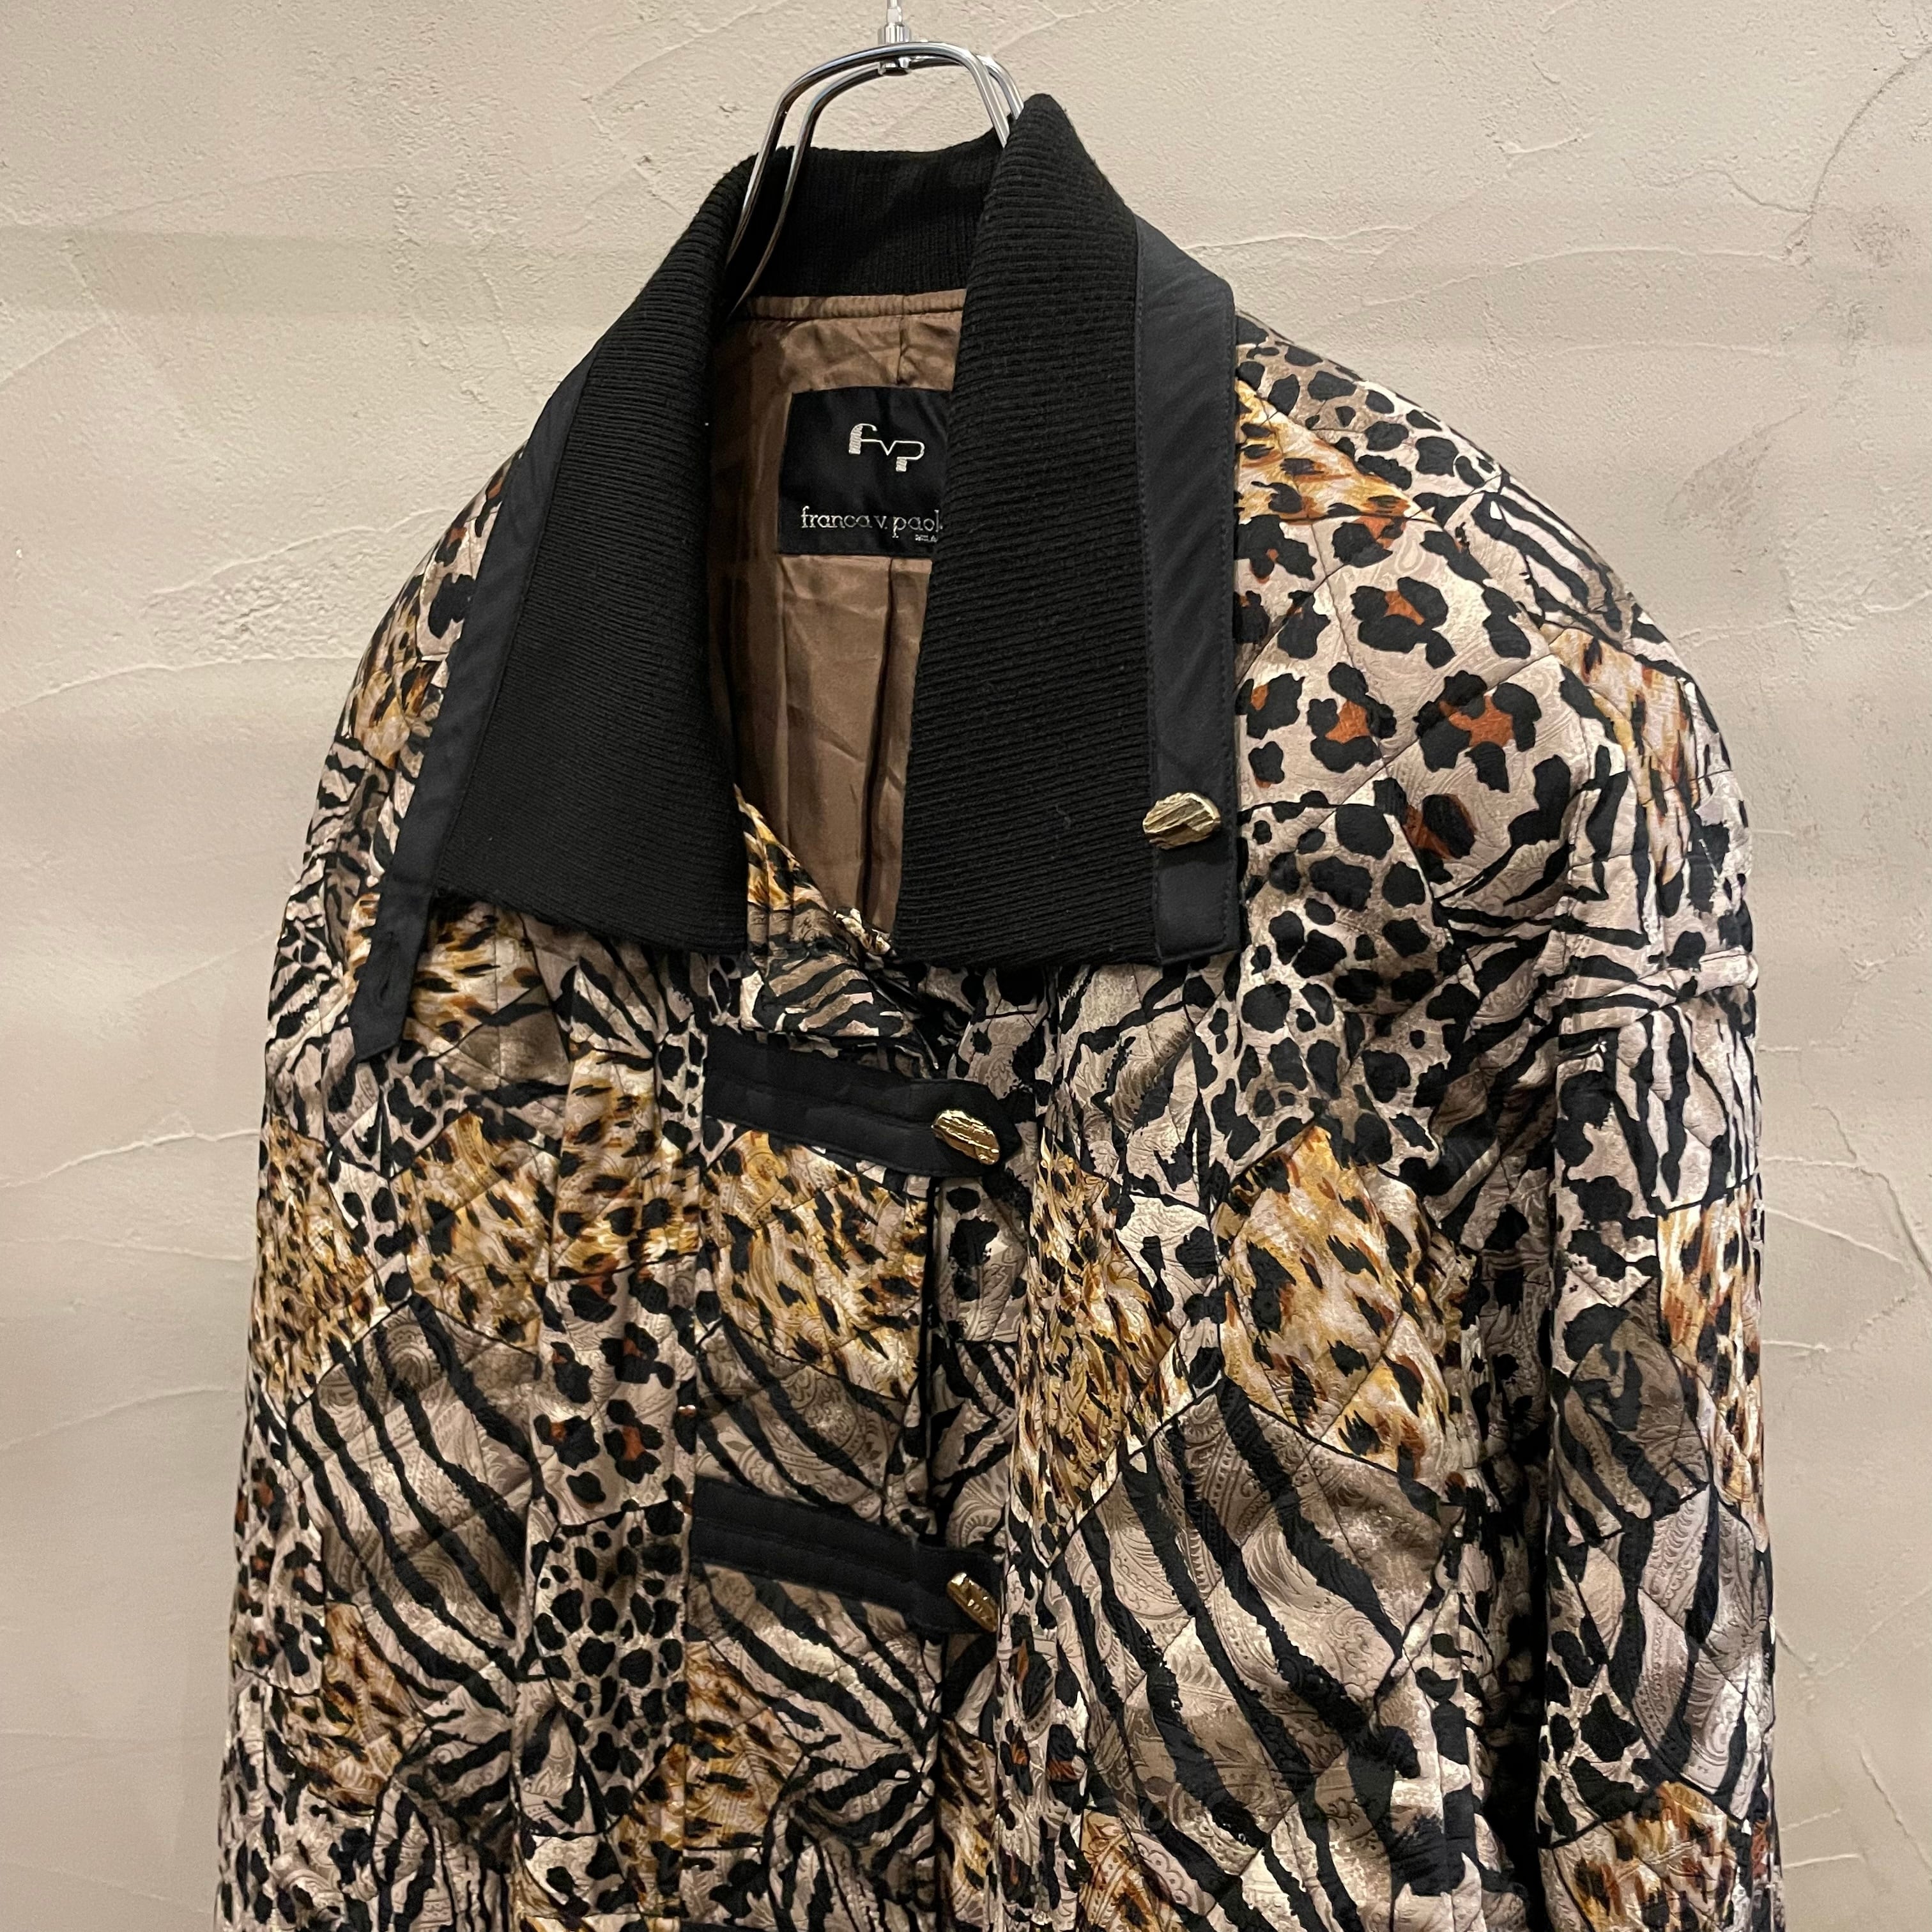 franca v.paoloni / quilting animal pattern jacket / 90's | ROOM